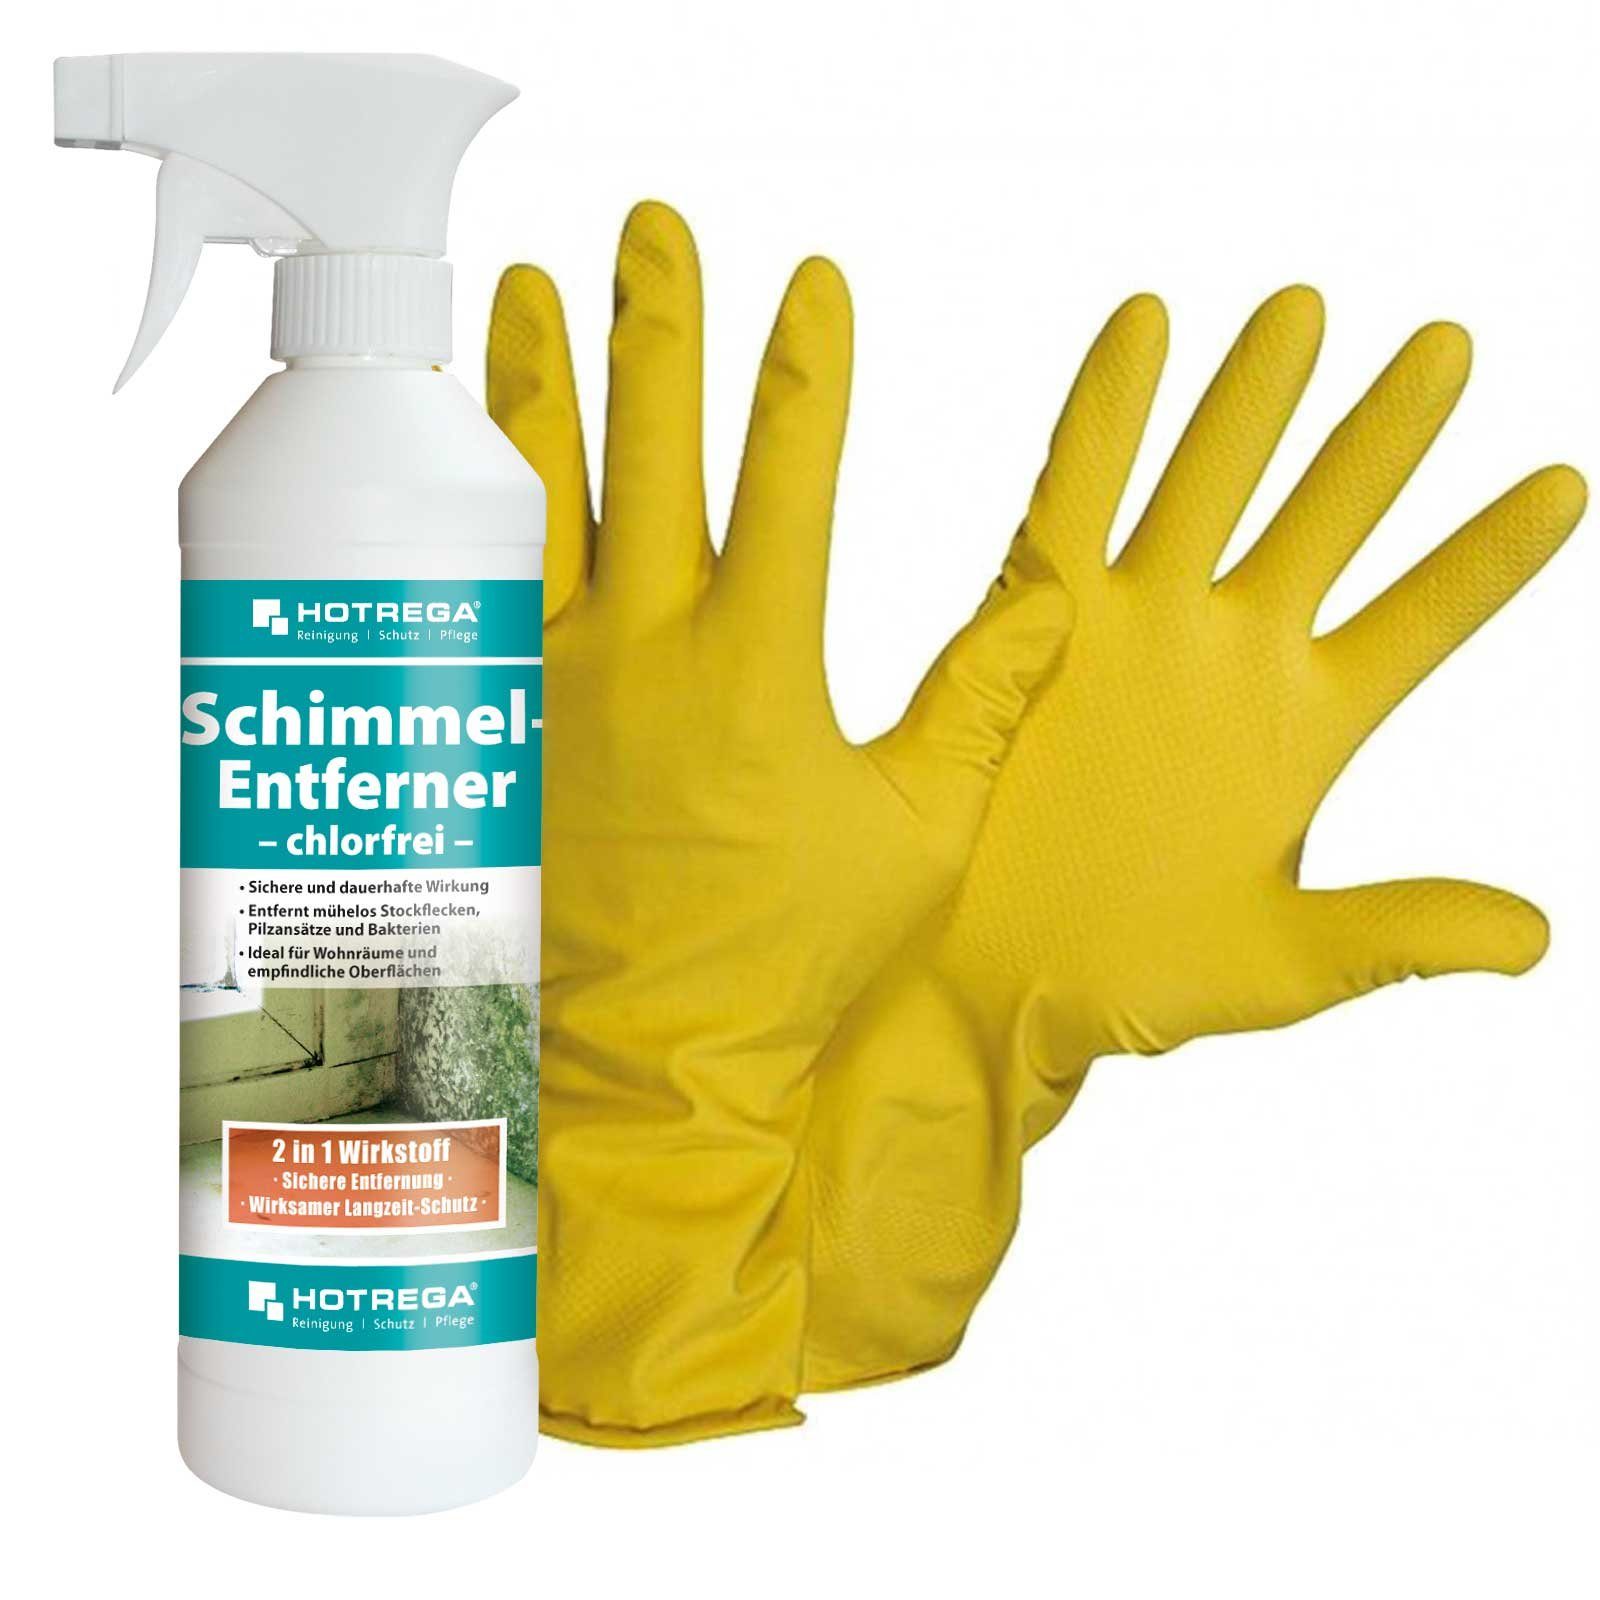 HOTREGA® Schimmel Entferner chlorfrei 500 ml SET + NITRAS Handschuhe Gr. 10 Schimmelentferner | Schimmelentferner